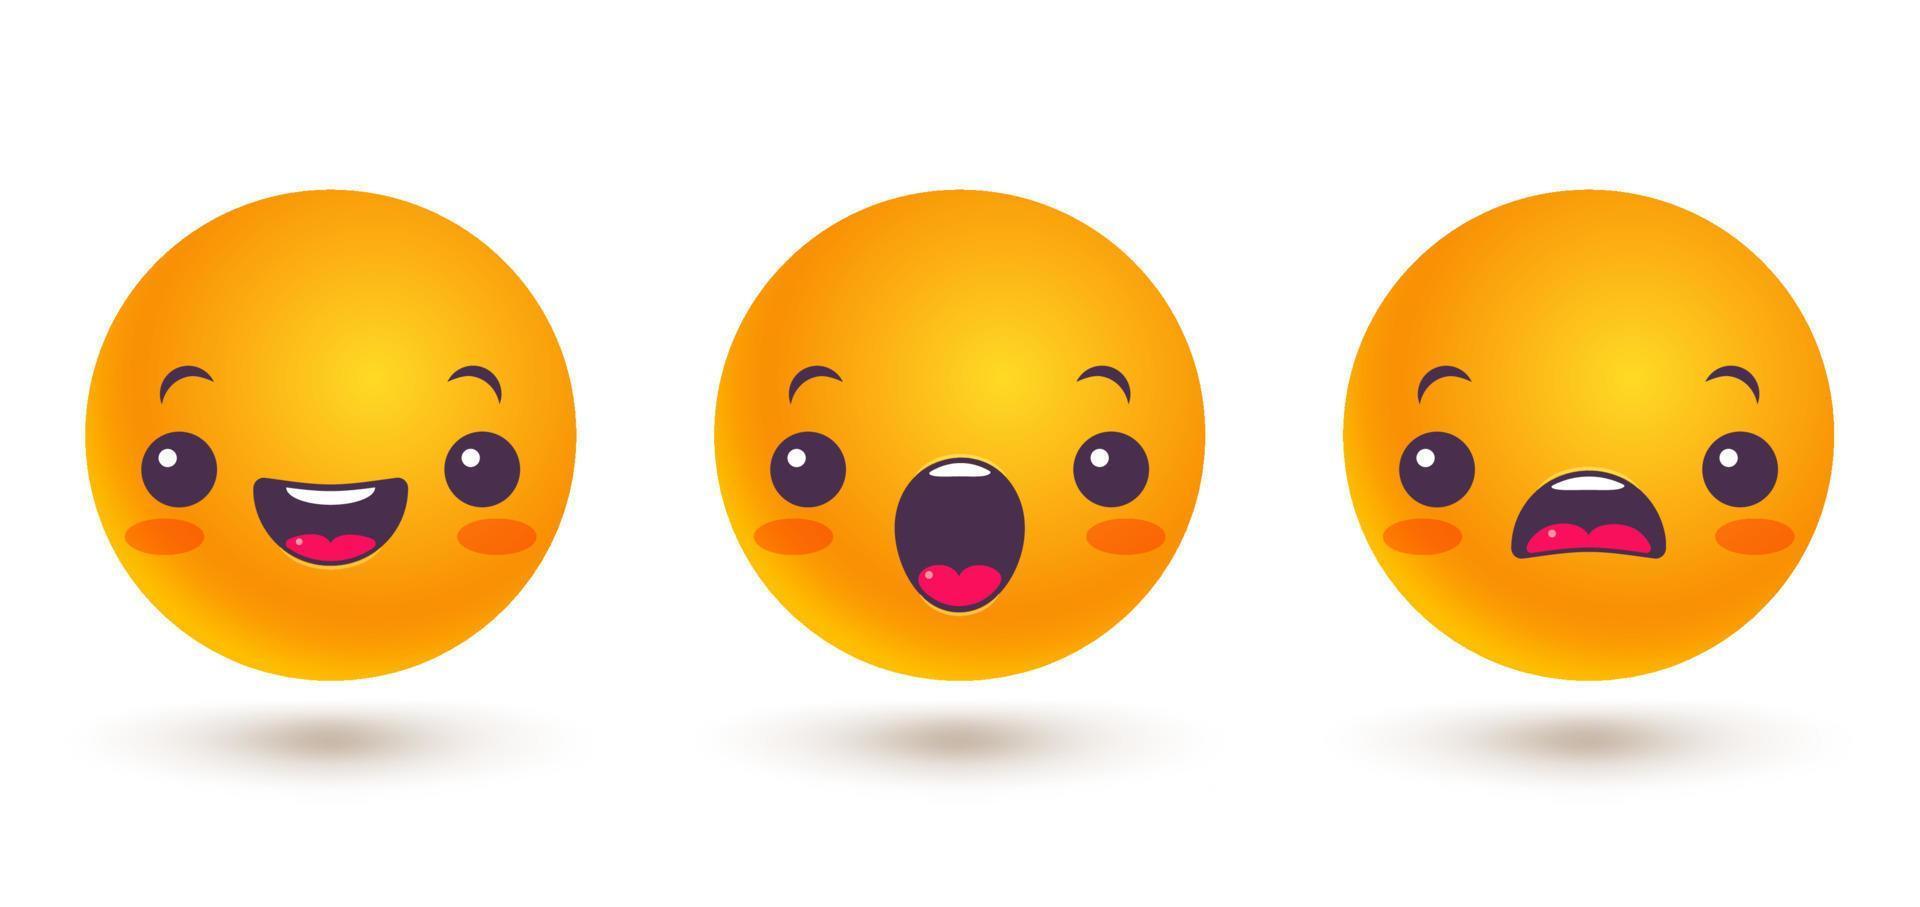 Vector set icons of emoji in kawaii style.